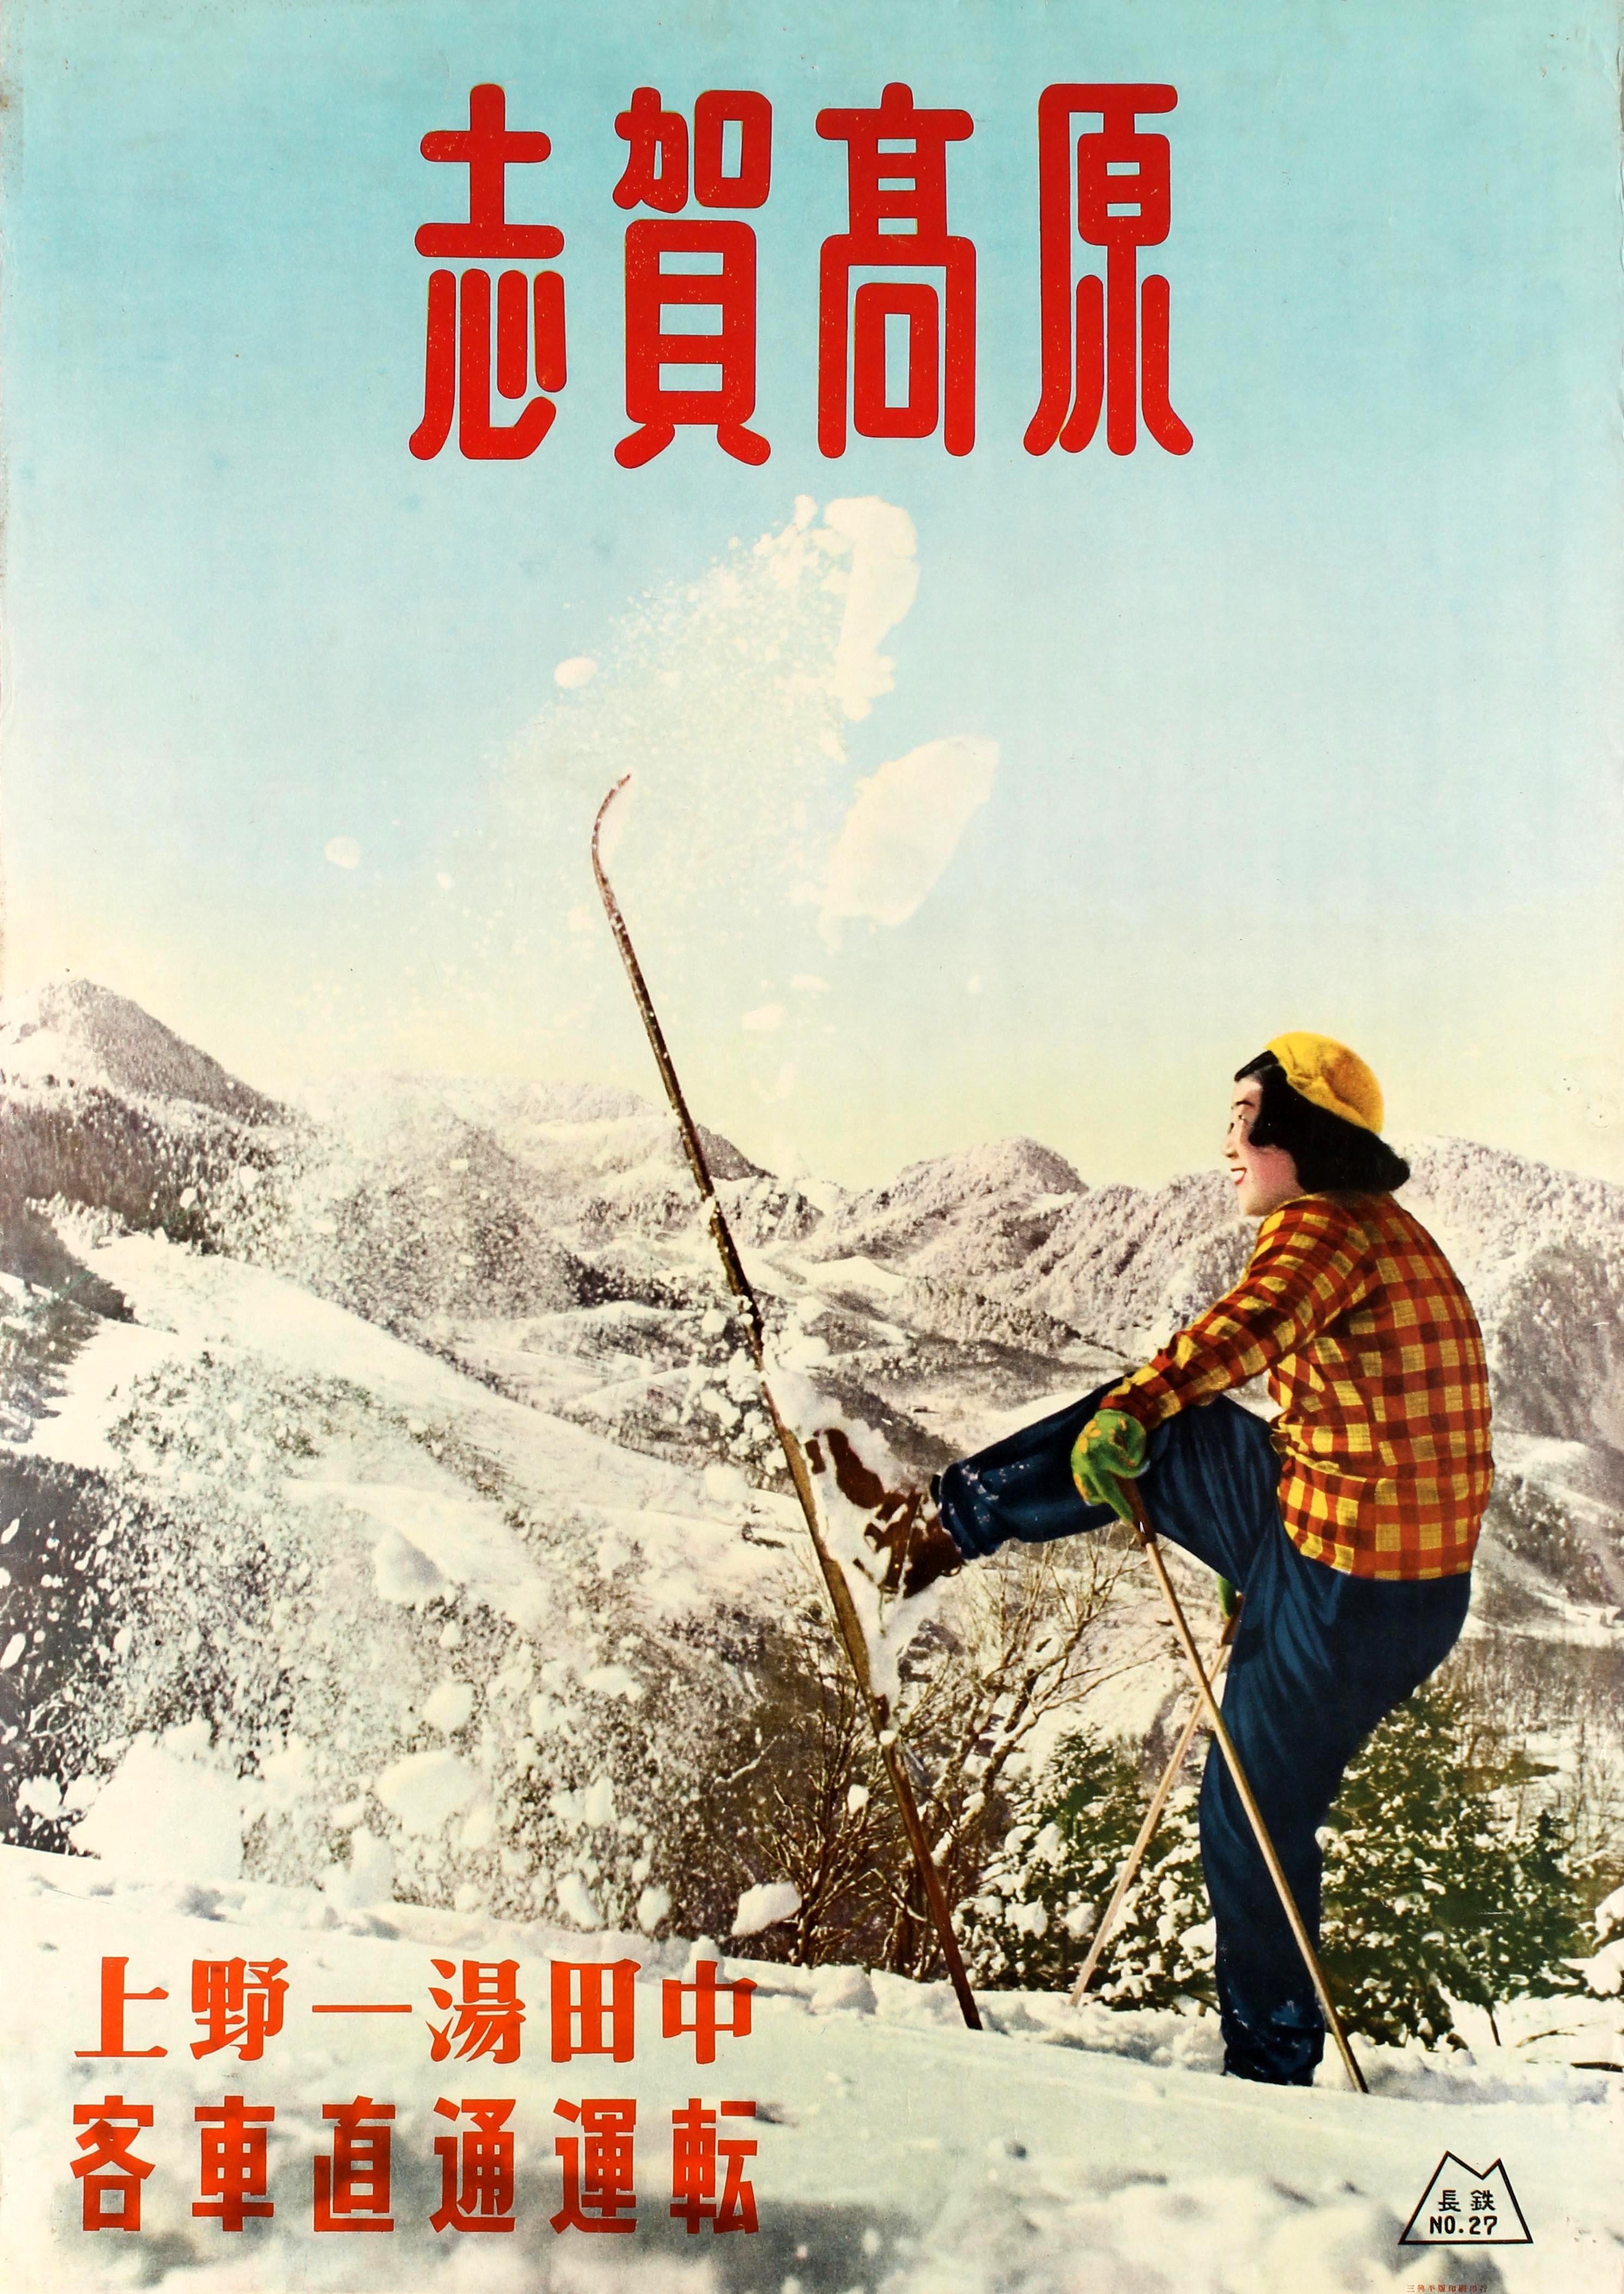 Unknown Print - Original Vintage Winter Sport Skiing Poster Shiga Kogen Ski Resort Japan Skier